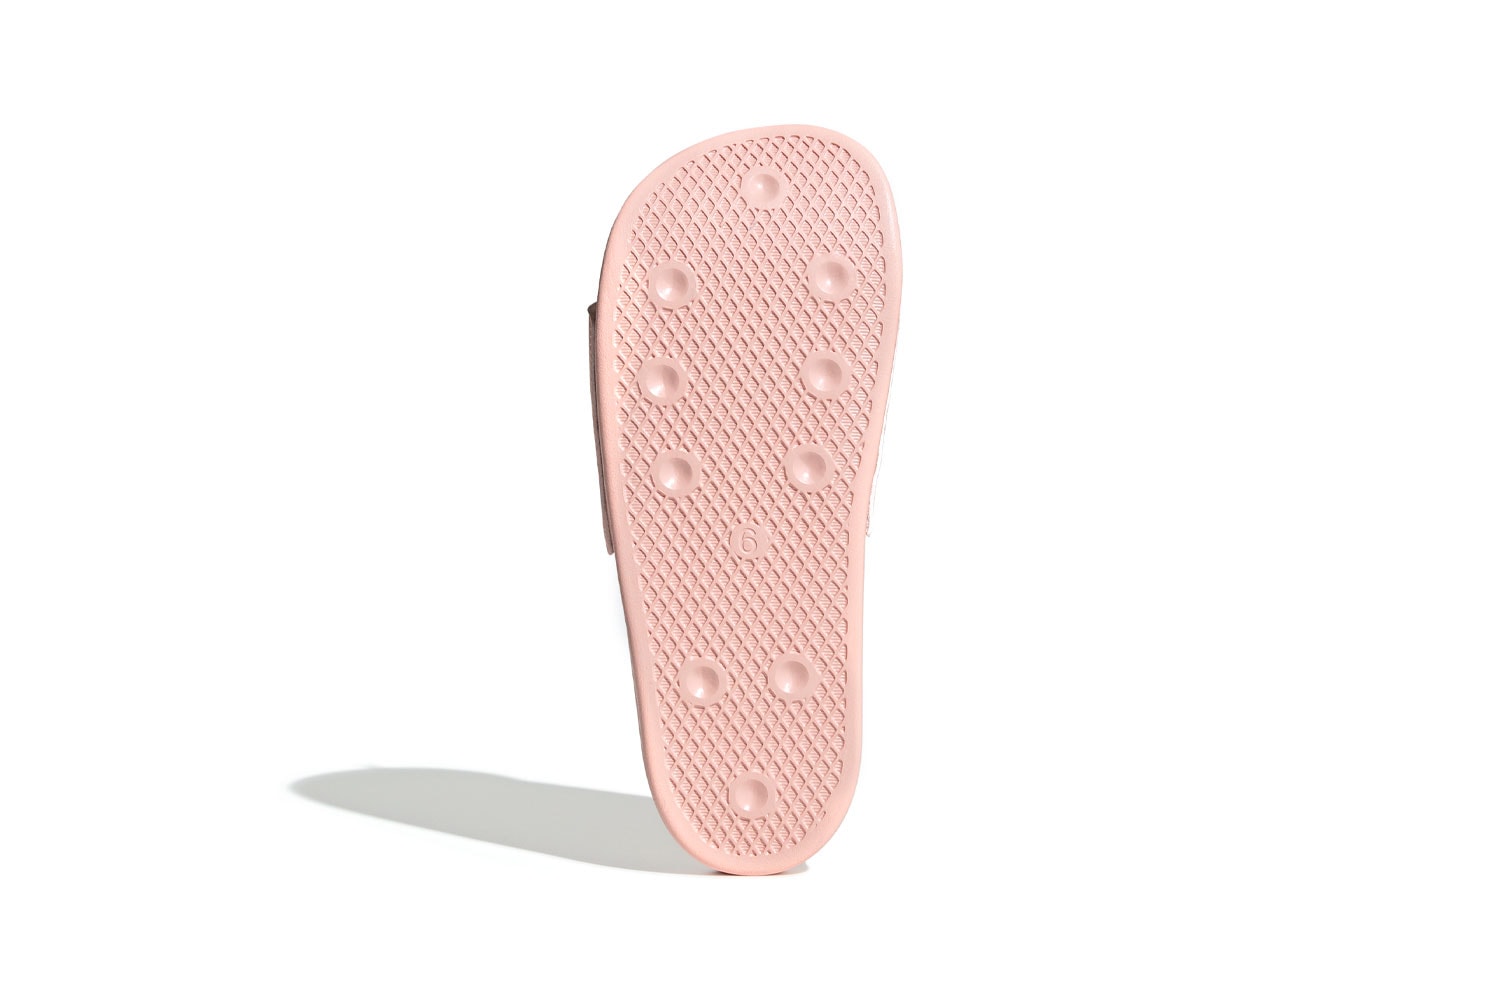 adidas adilette lite summer slides sandals pastel pink 